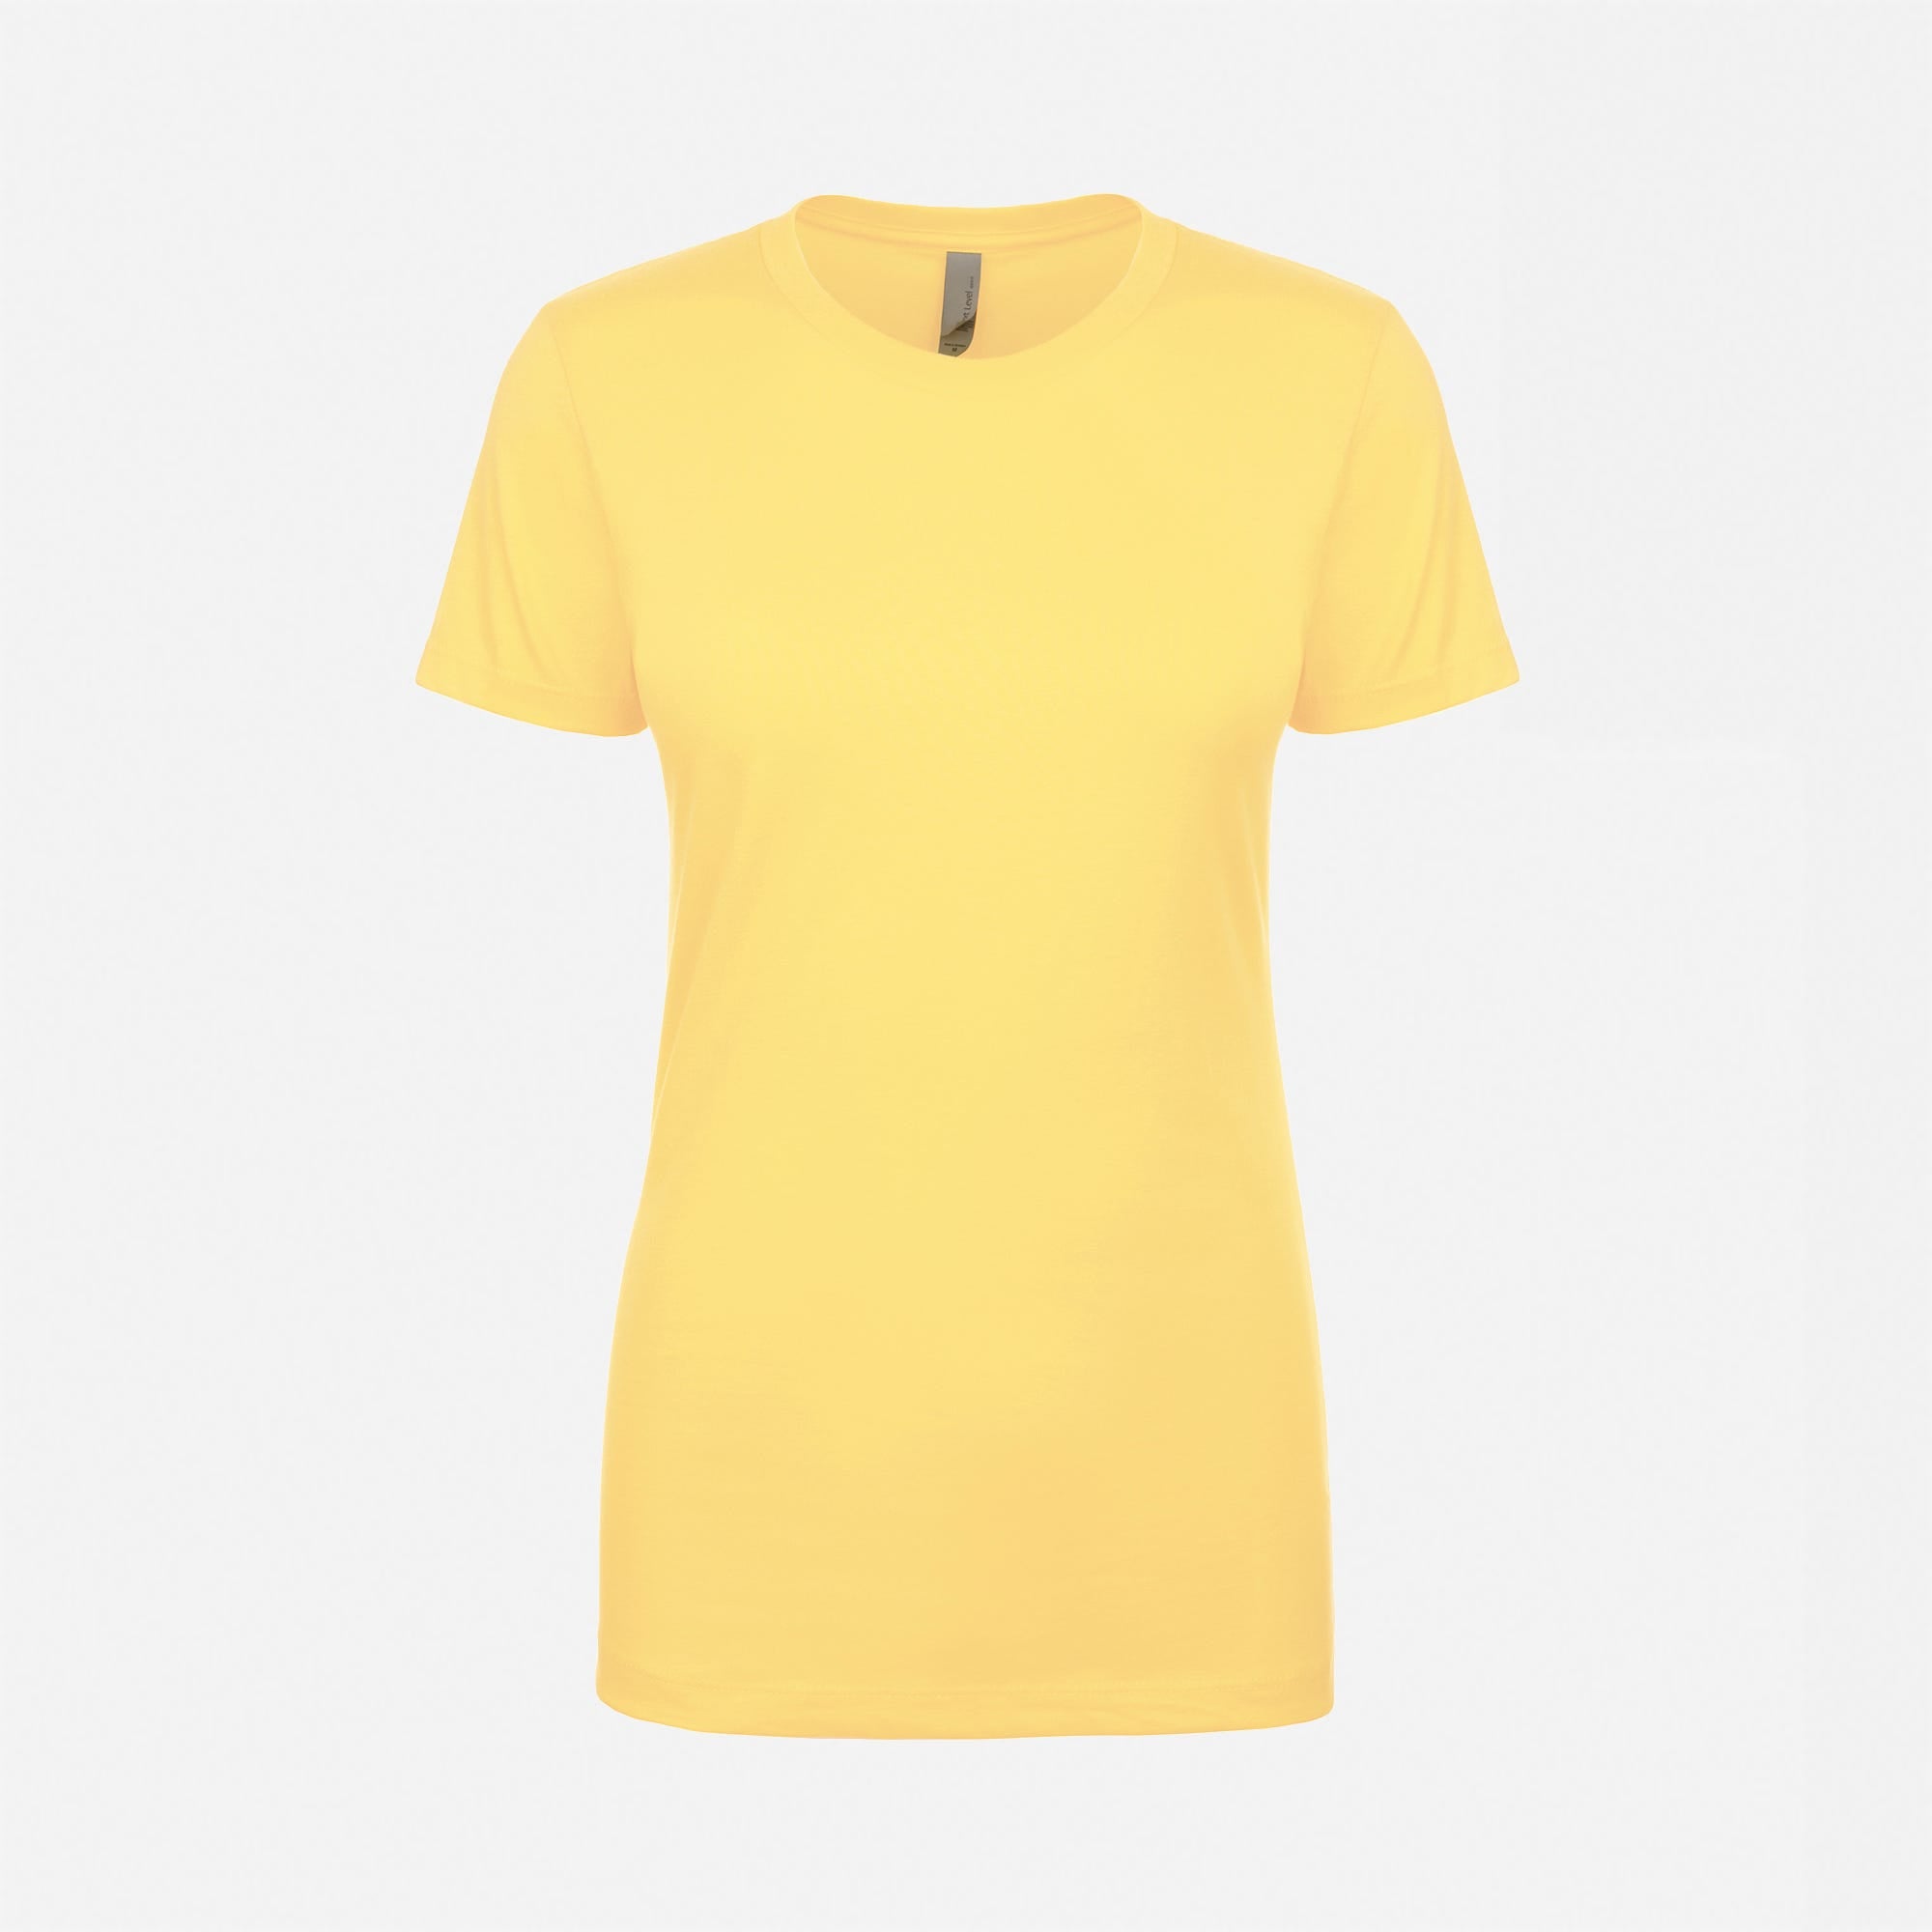 Cotton Boyfriend T-Shirt Vibrant Yellow 3900 Front View Next Level Apparel